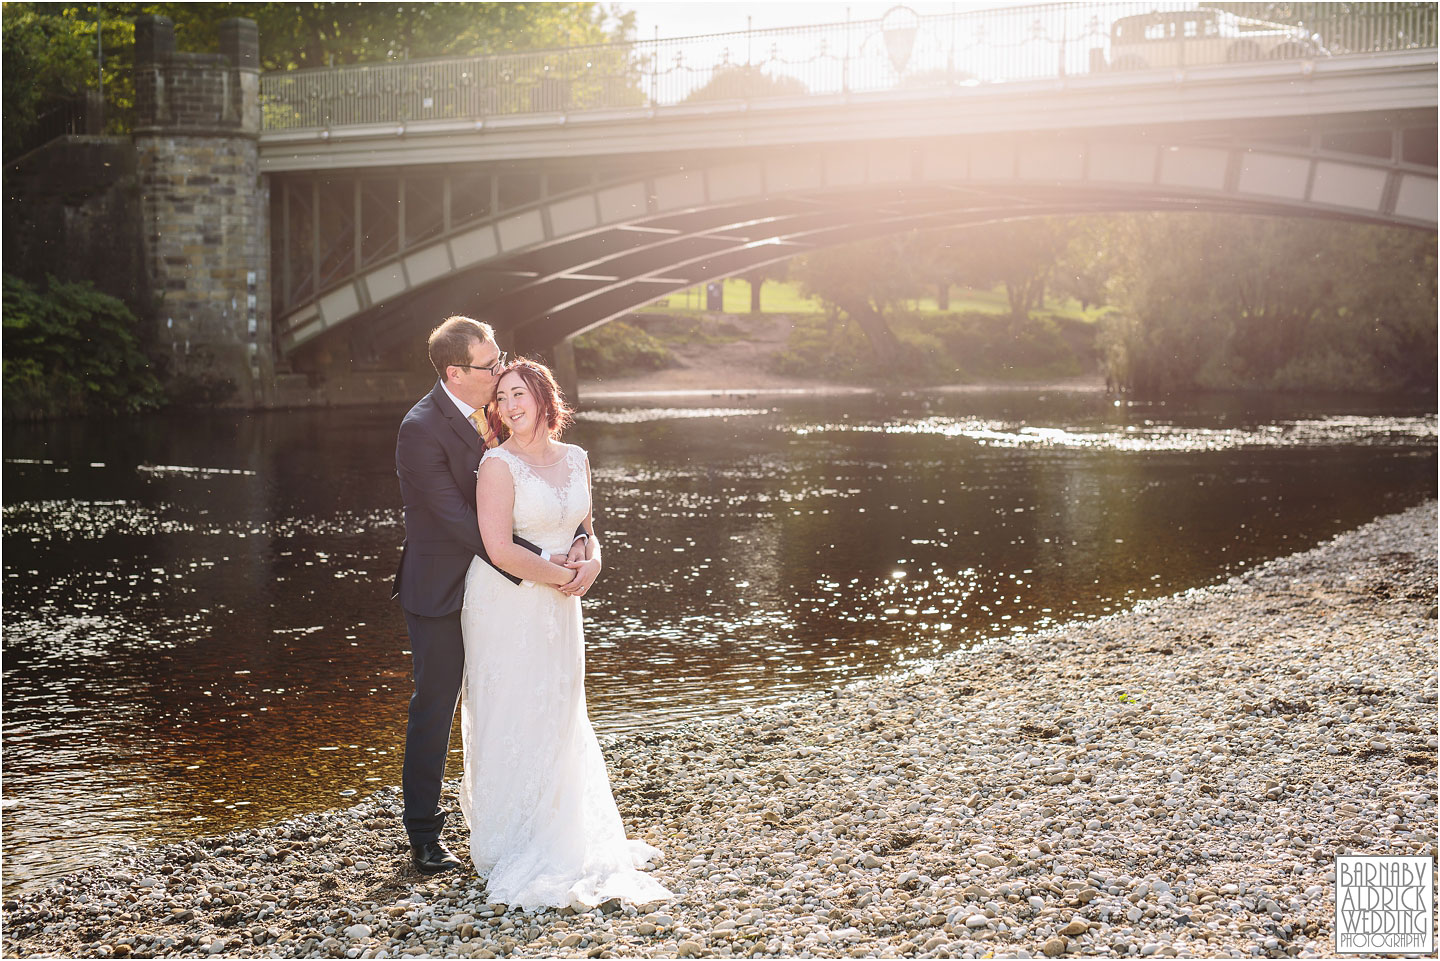 Ilkley Wedding Photography, River Wharf Wedding, The Box Tree Wedding Photography